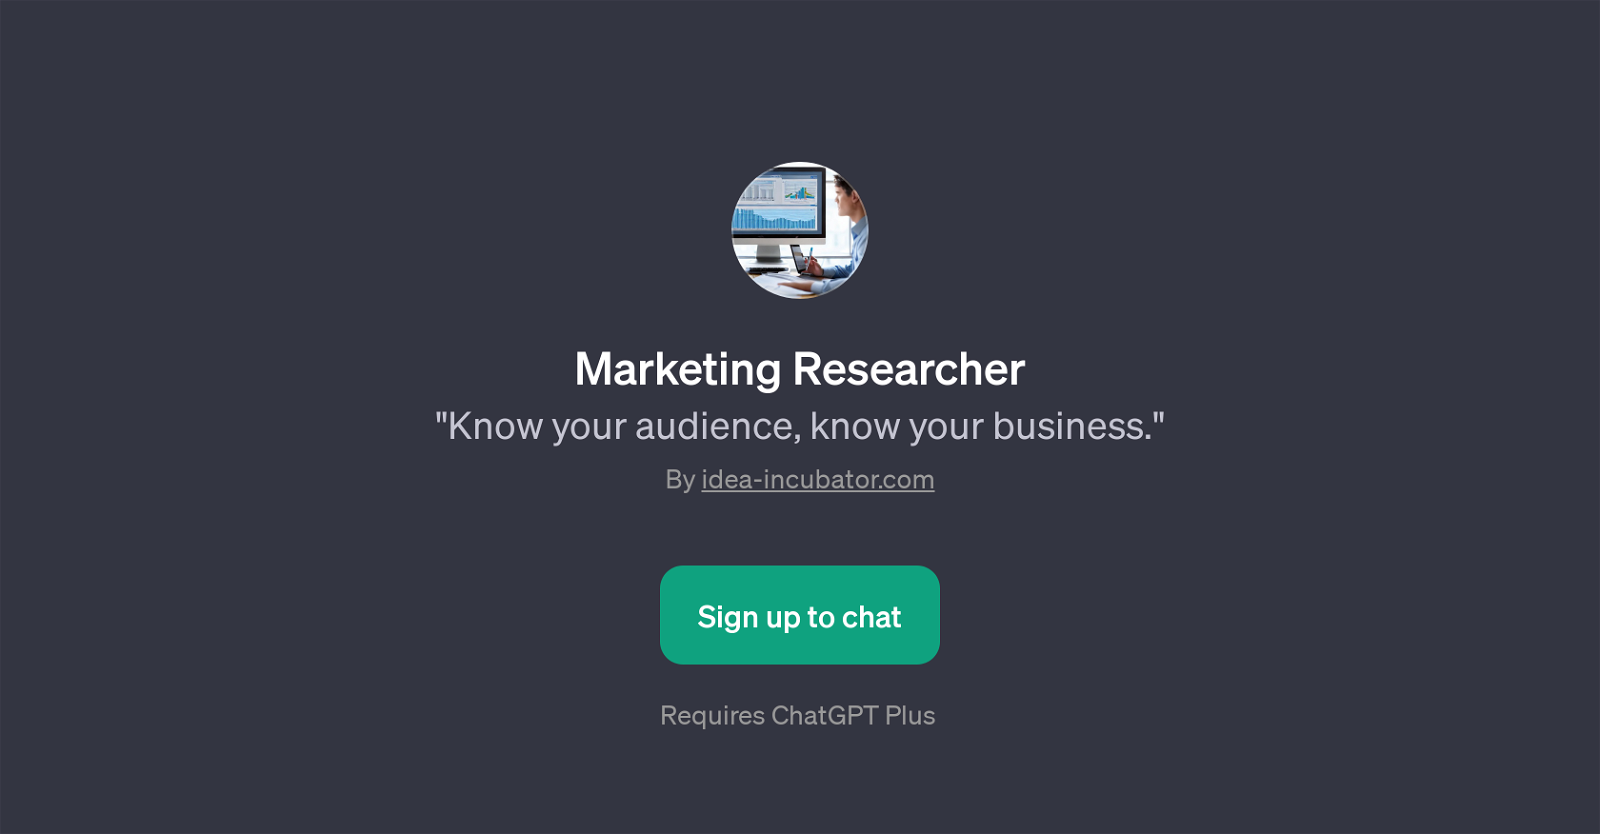 Marketing Researcher website